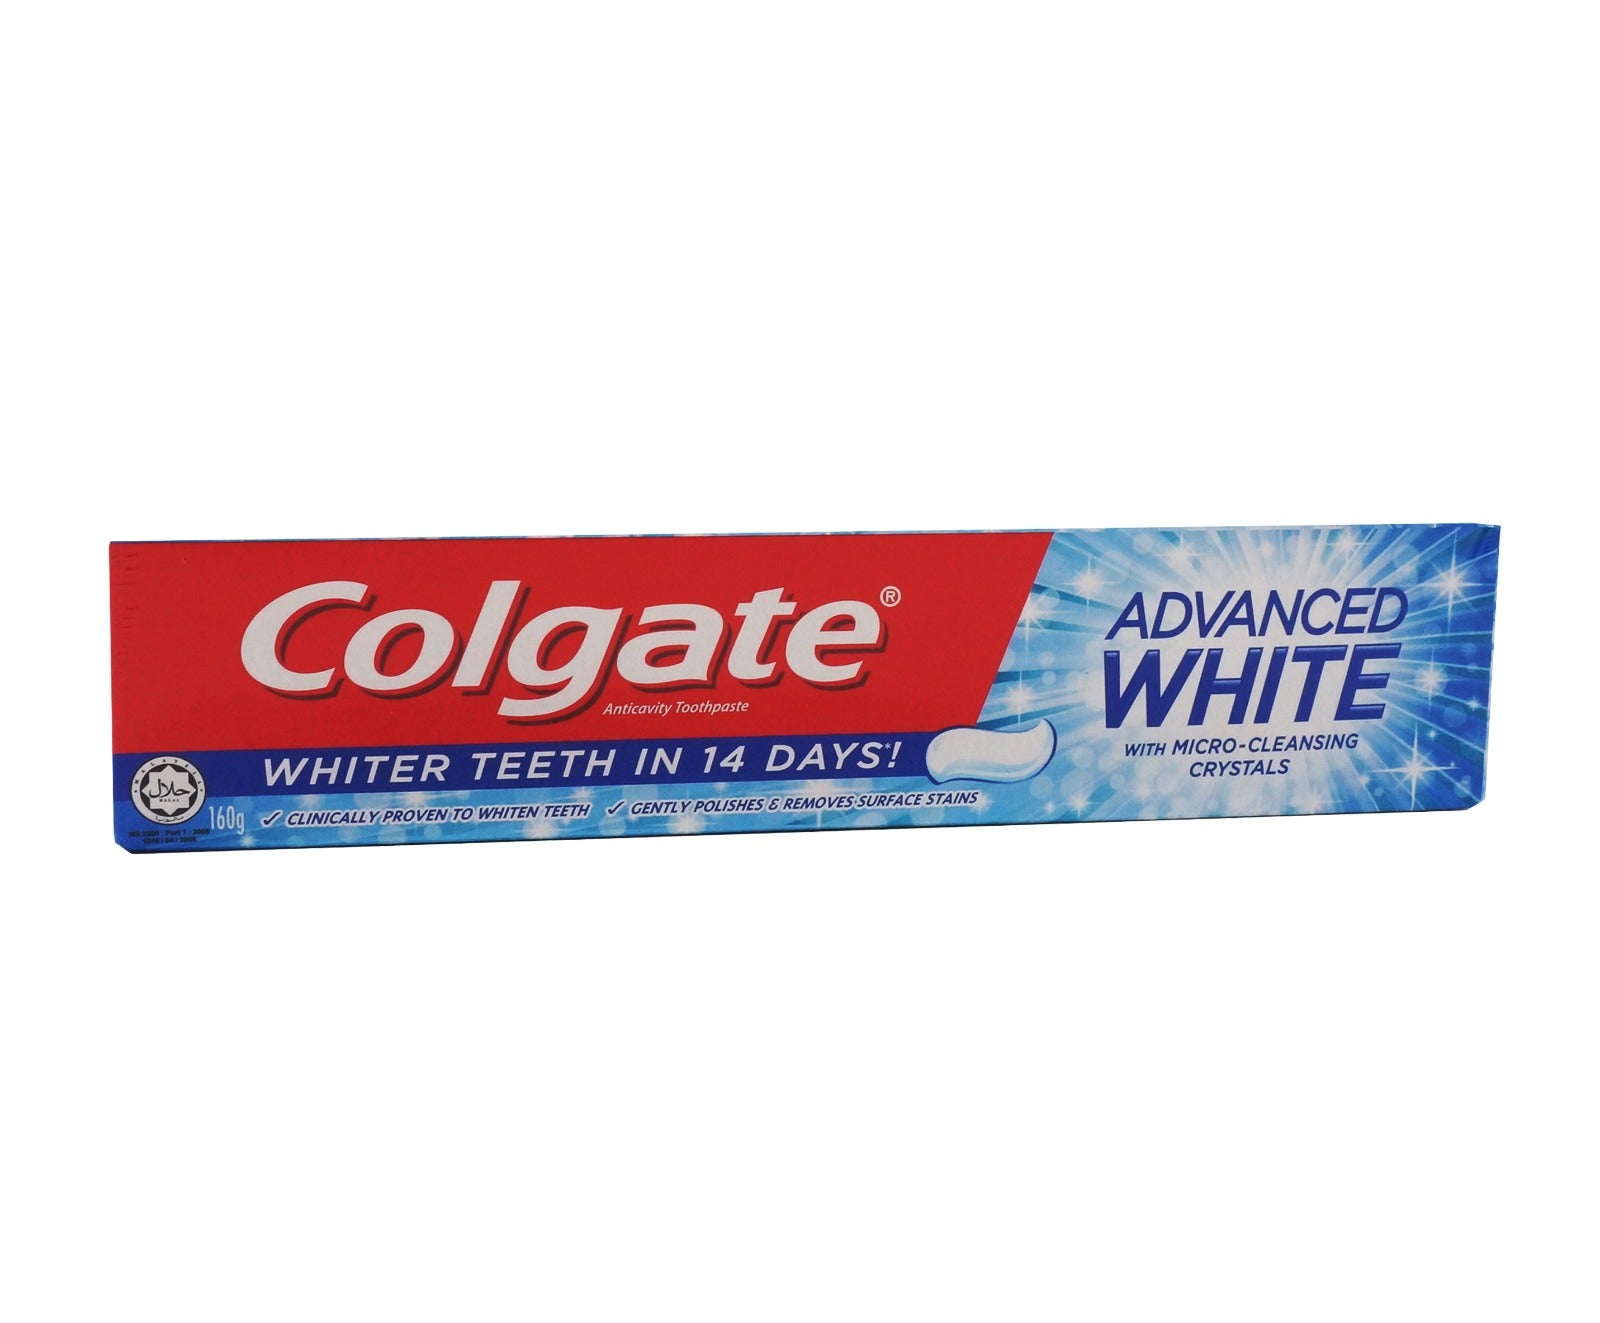 Colgate Advanced Whitening Toothpaste (160g – Piece)